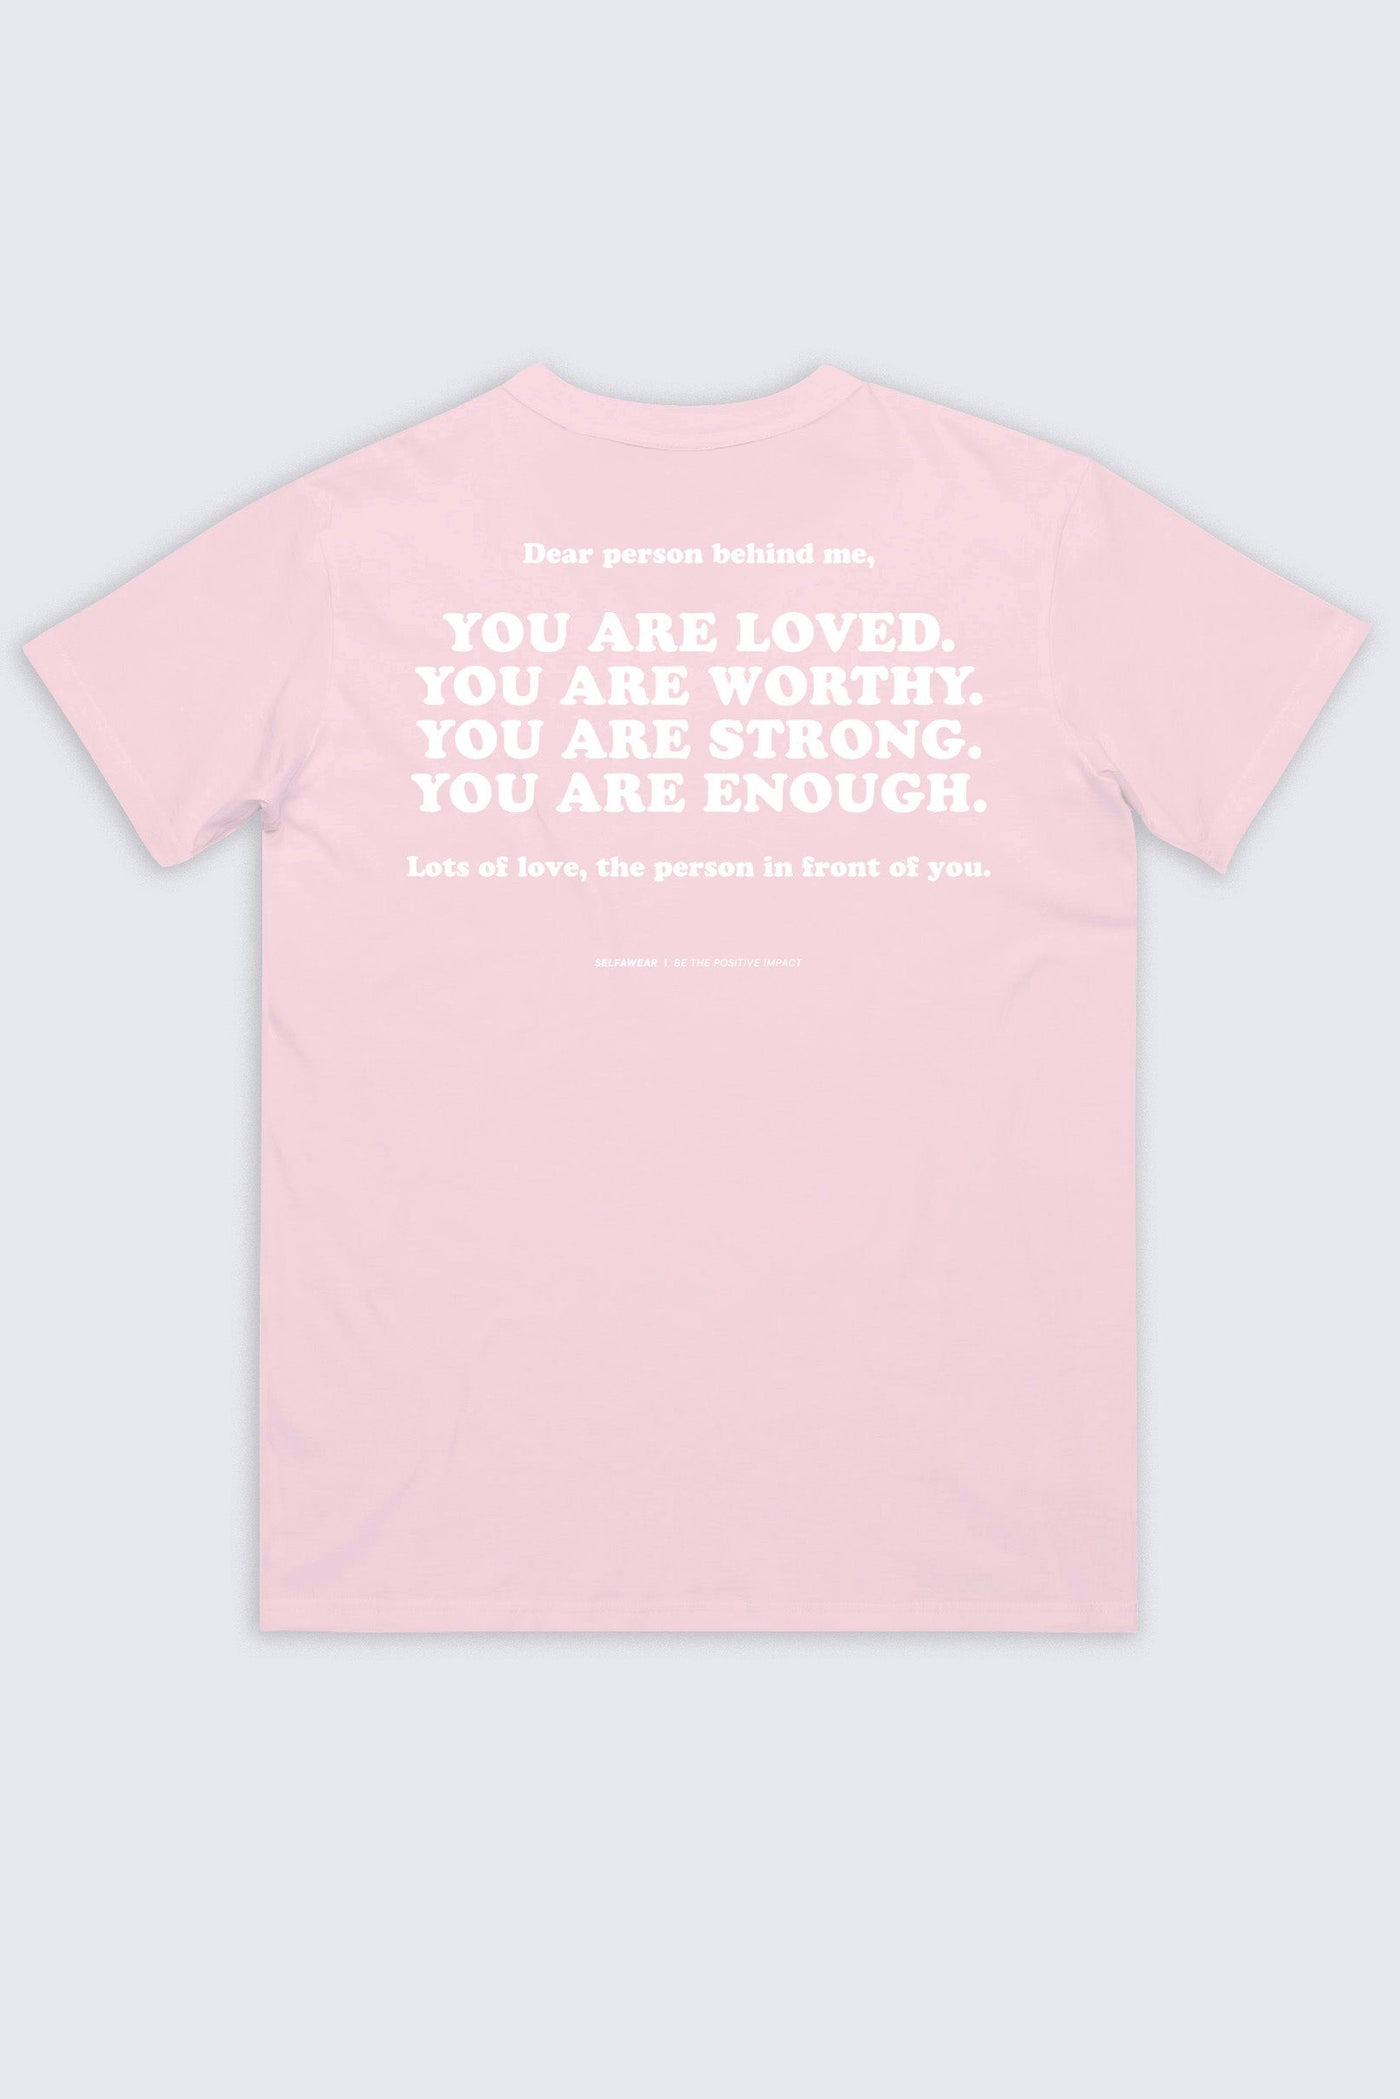 Words Of Affirmation T-Shirt Pink Shirts Selfawear 